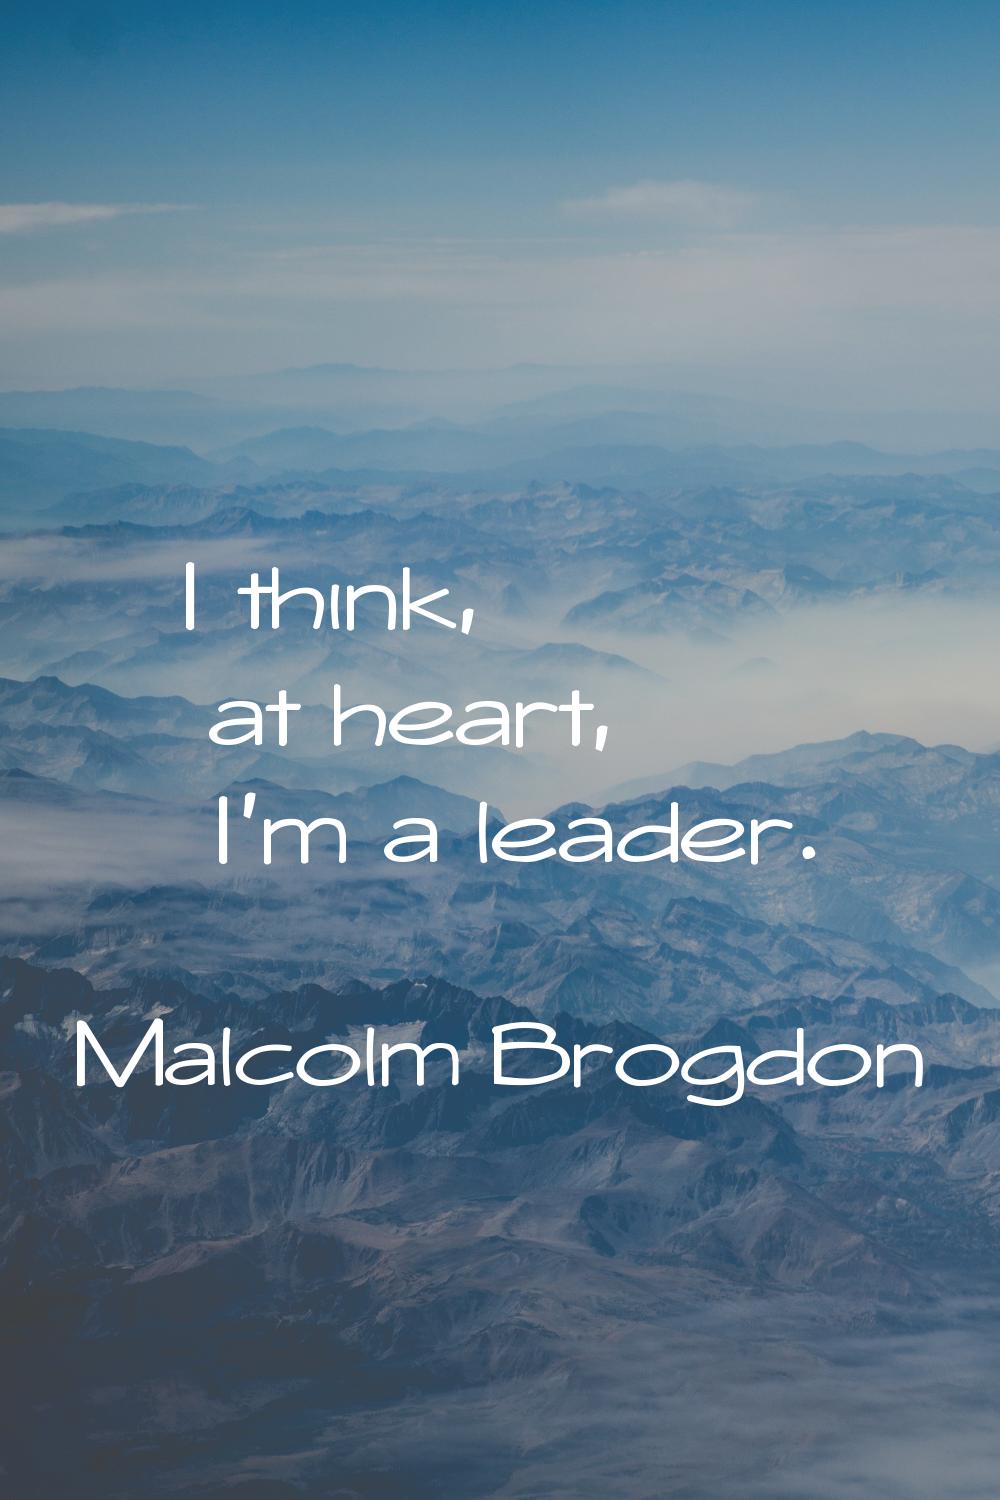 I think, at heart, I'm a leader.